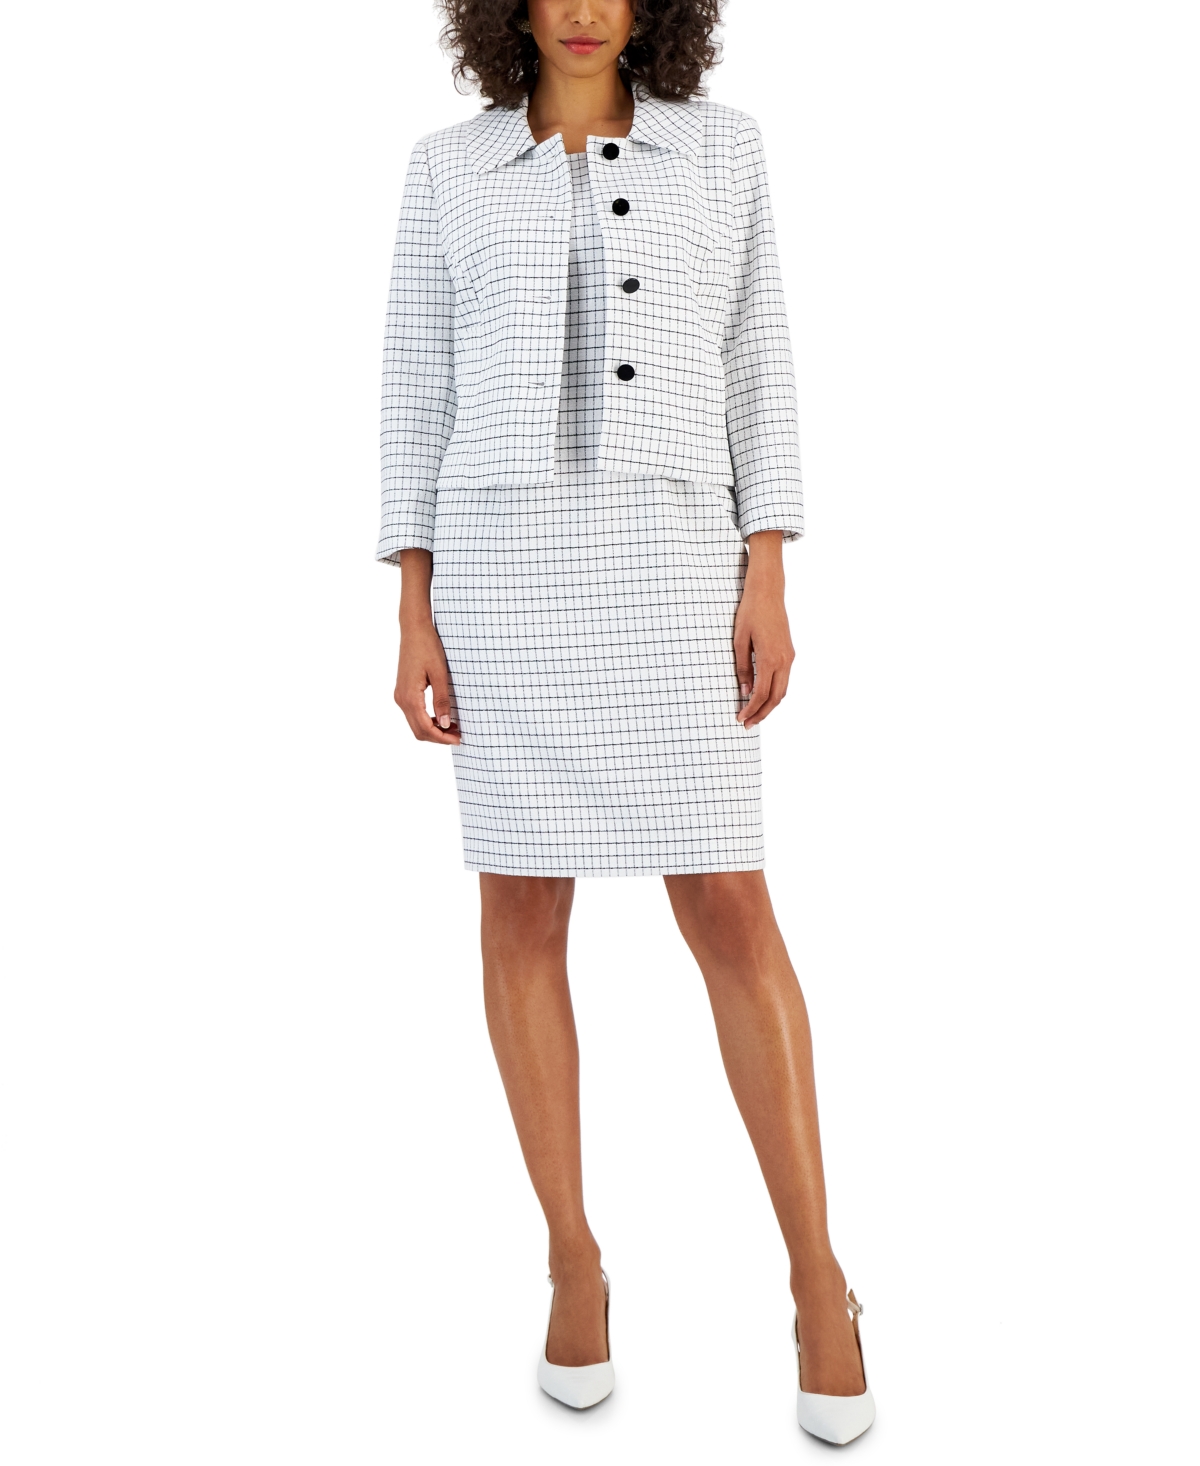 Women's Checkered Button-Front Jacket & Sheath Dress Suit - Vanilla Ice/Black